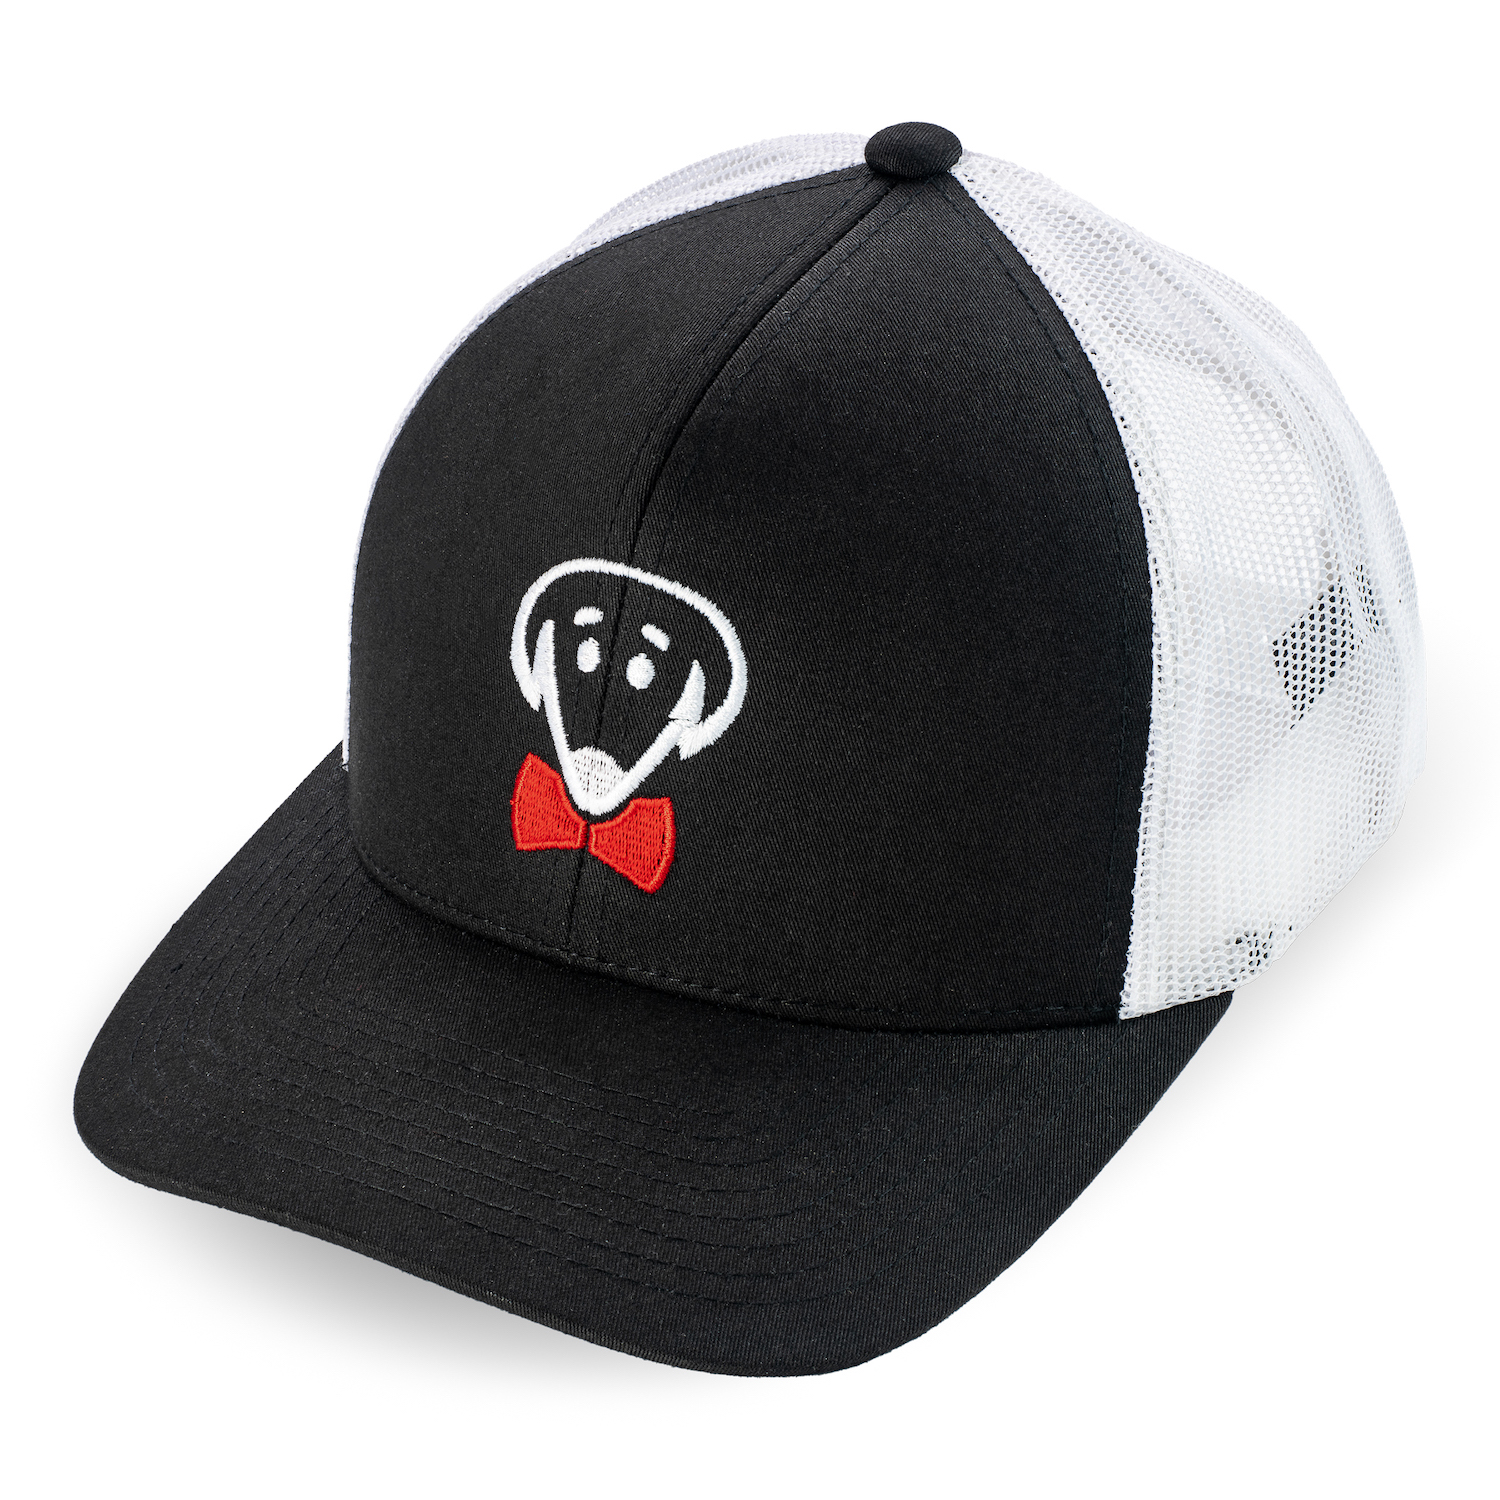 Beau Tyler - Duke hat black and white front